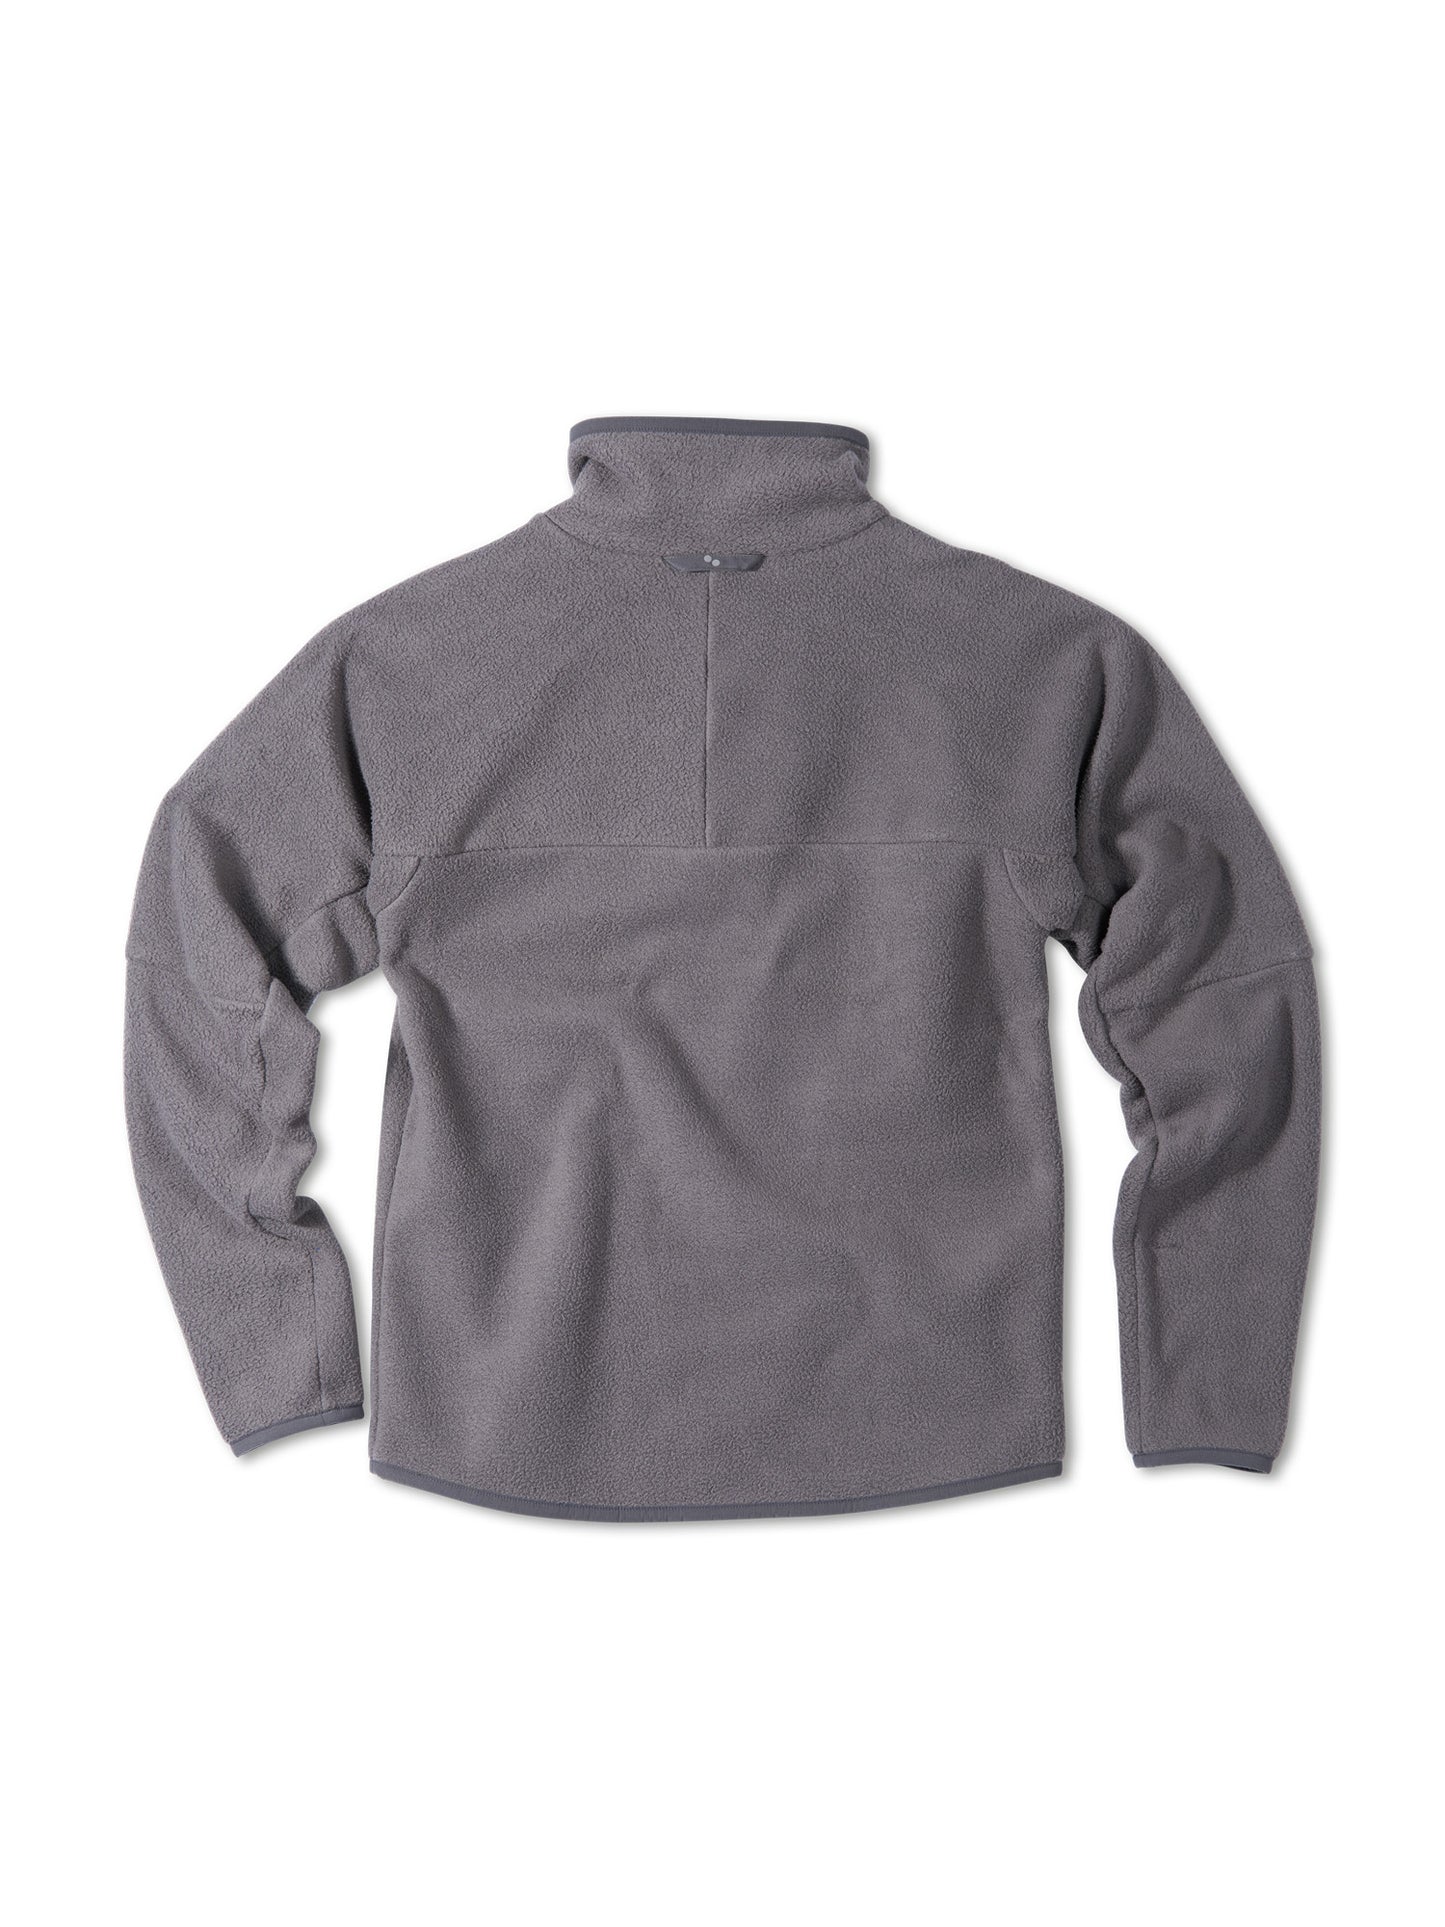 pinqponq-Fleece-Pullover-Graphite-Grey-back